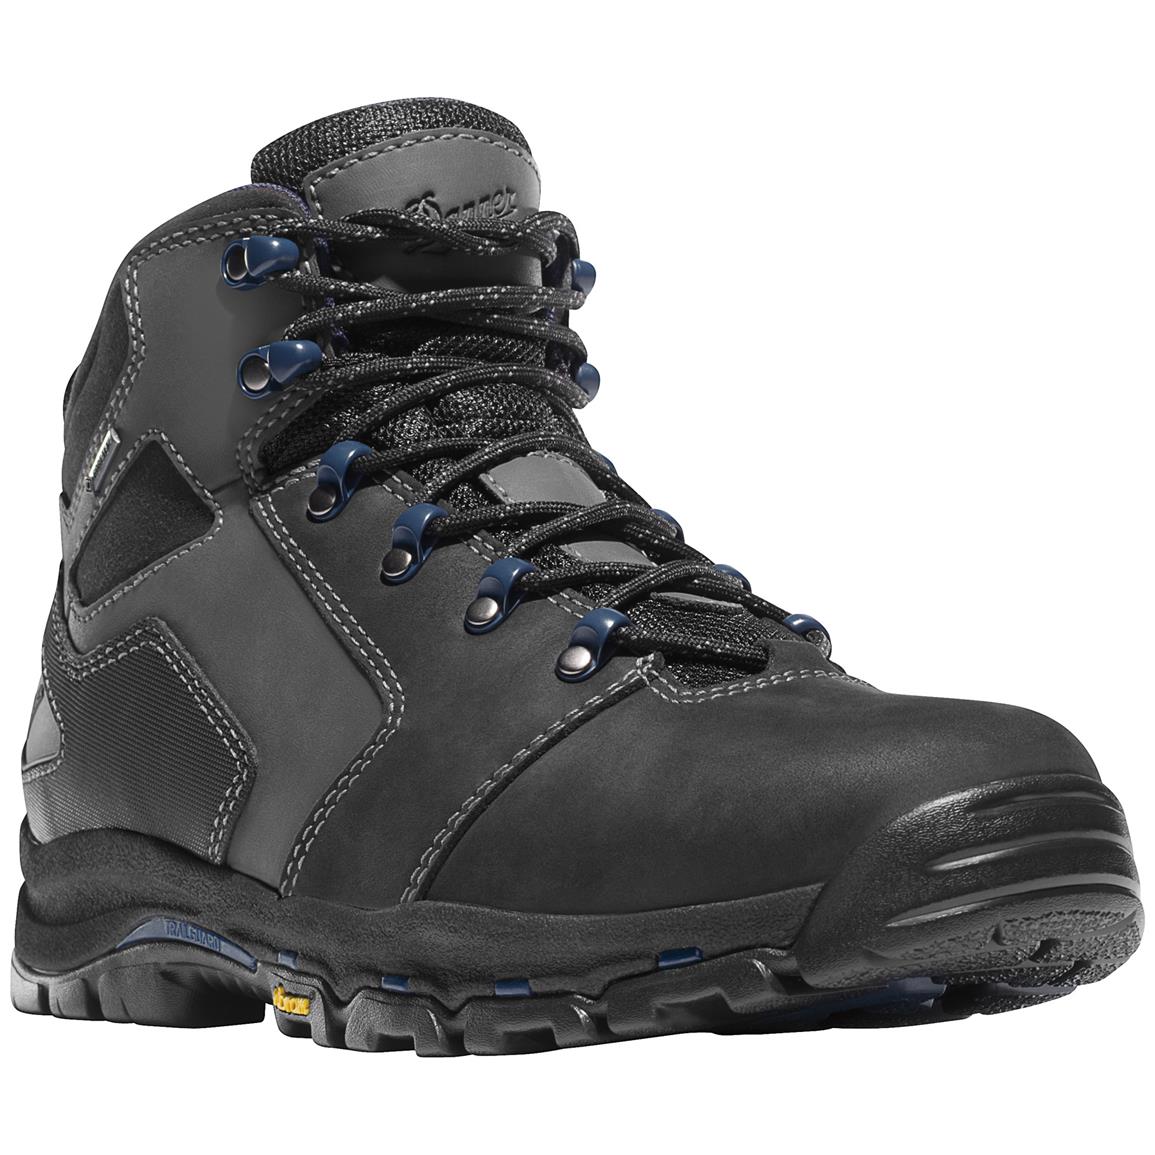 Men's Danner® 4.5 inch Vicious GTX® Waterproof Work Boots, Black / Blue